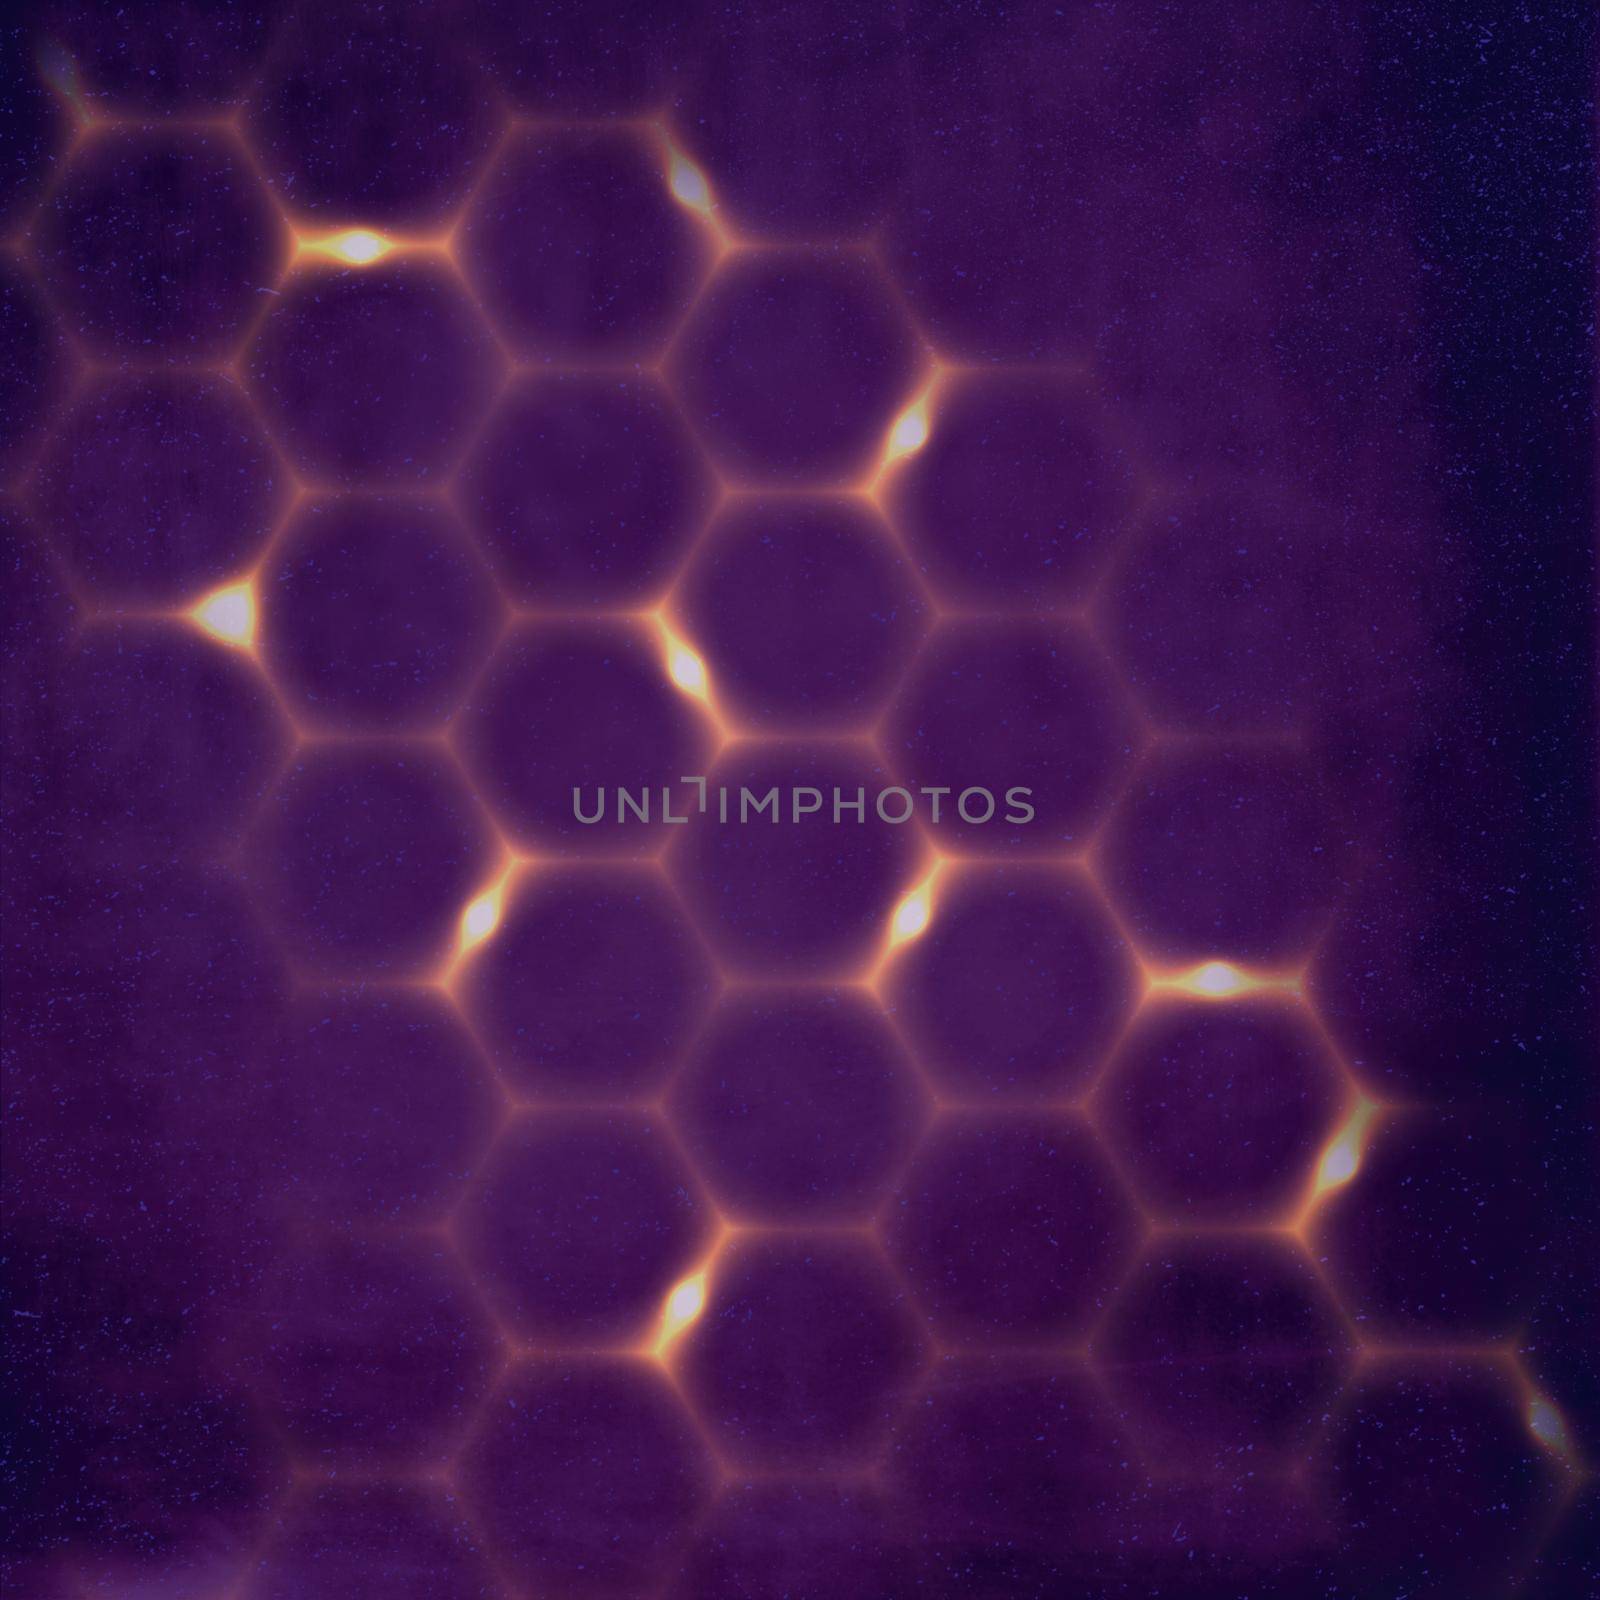 Abstract violet scientific honeycomb molecular grid background. Futuristic textured wallpaper illustration